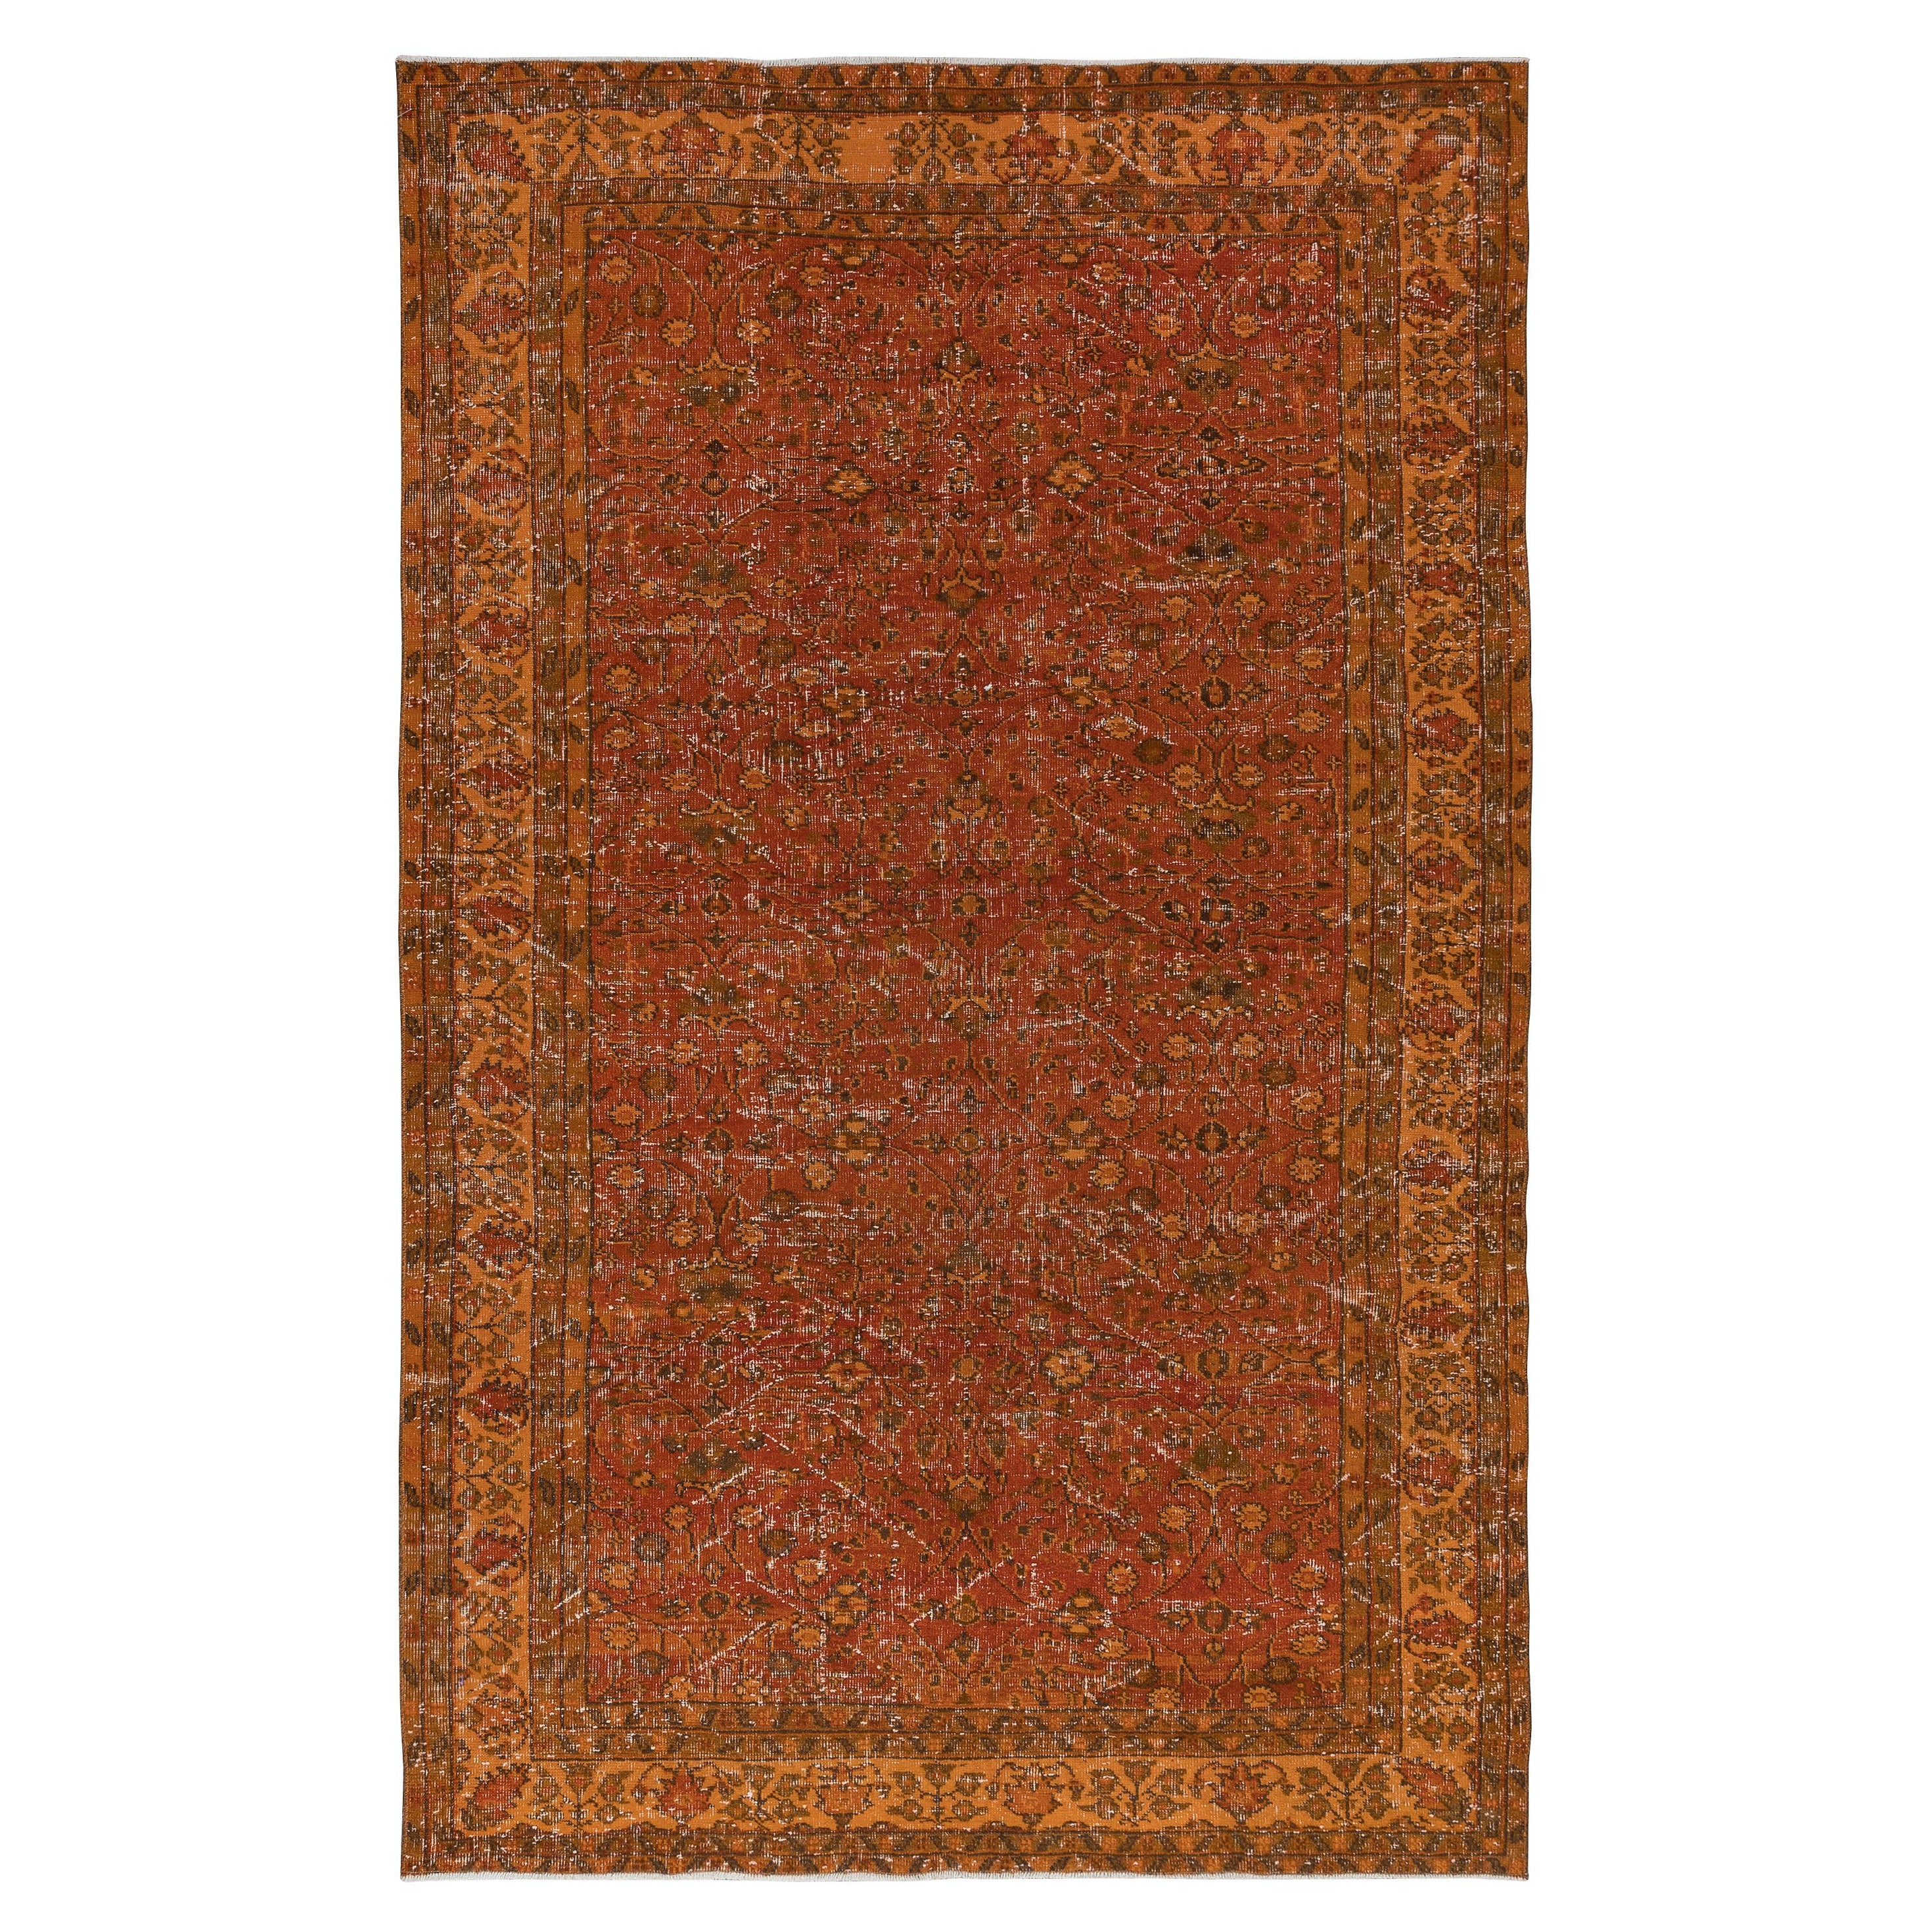 6x9.7 Ft Vivid Orange Turkish Rug, Vibrant Colored Handmade Bohem Carpet For Sale